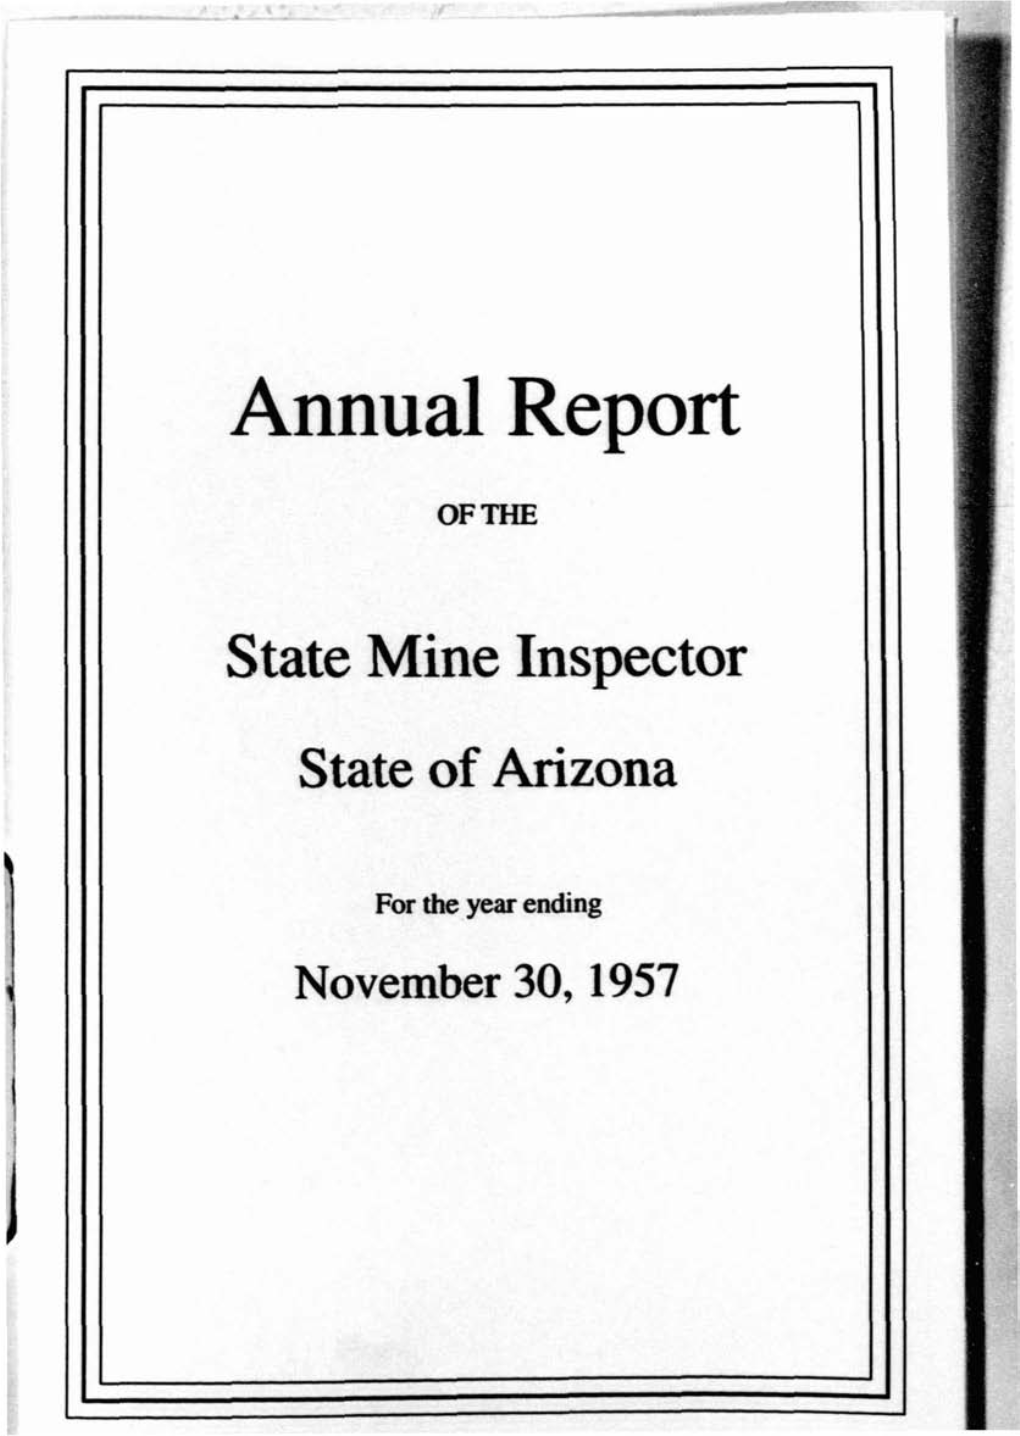 State Mine Inspector